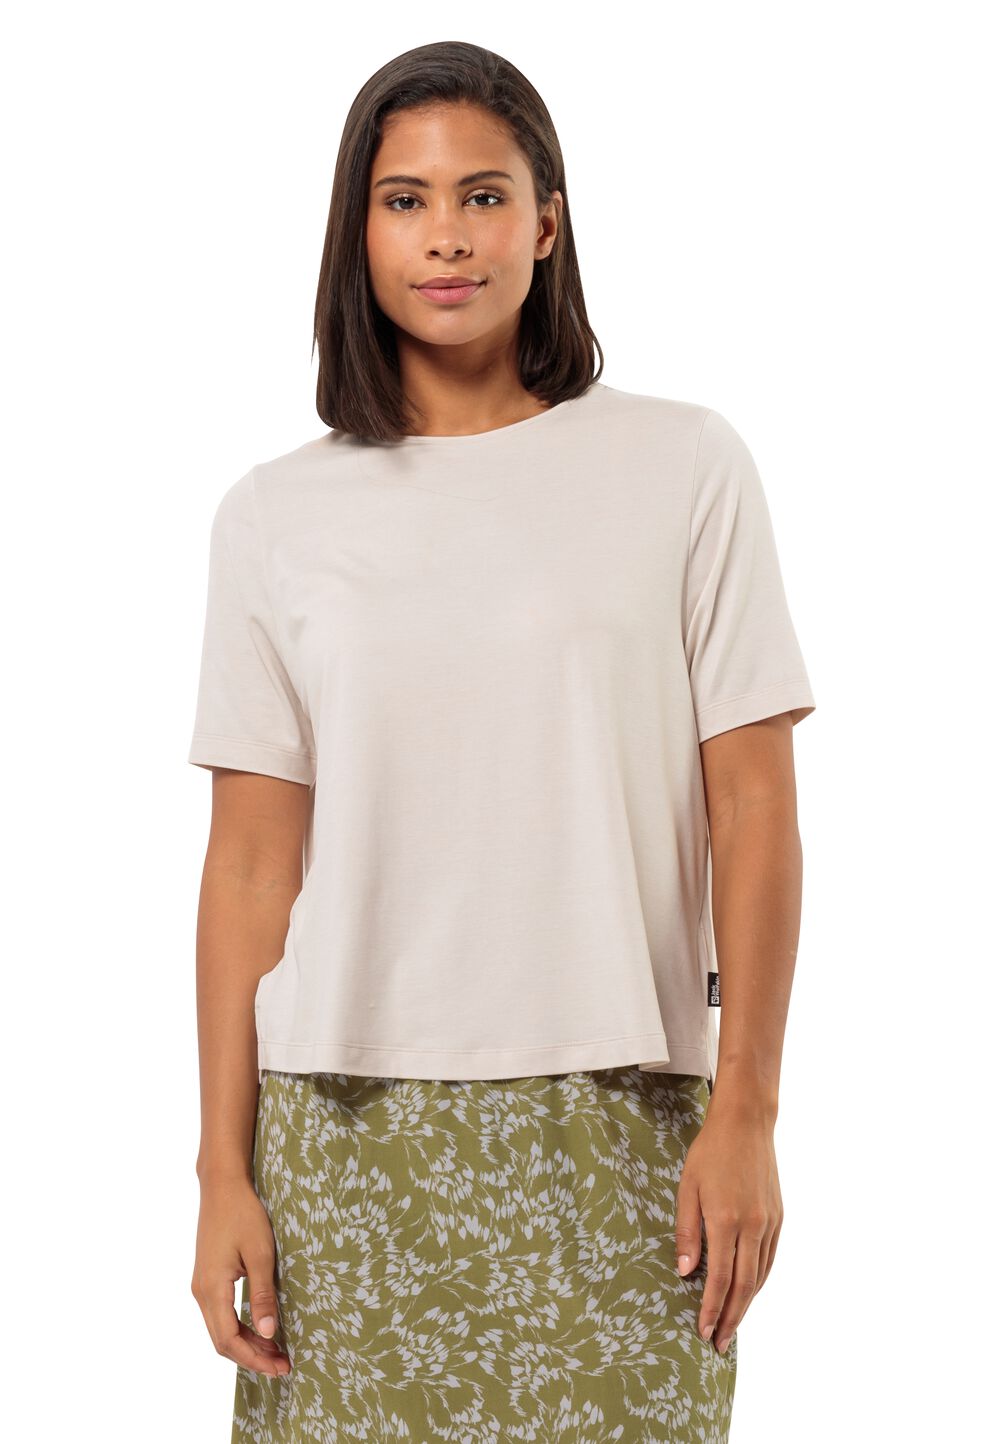 Jack Wolfskin Travel T-Shirt Women Functioneel shirt Dames XL sea shell sea shell